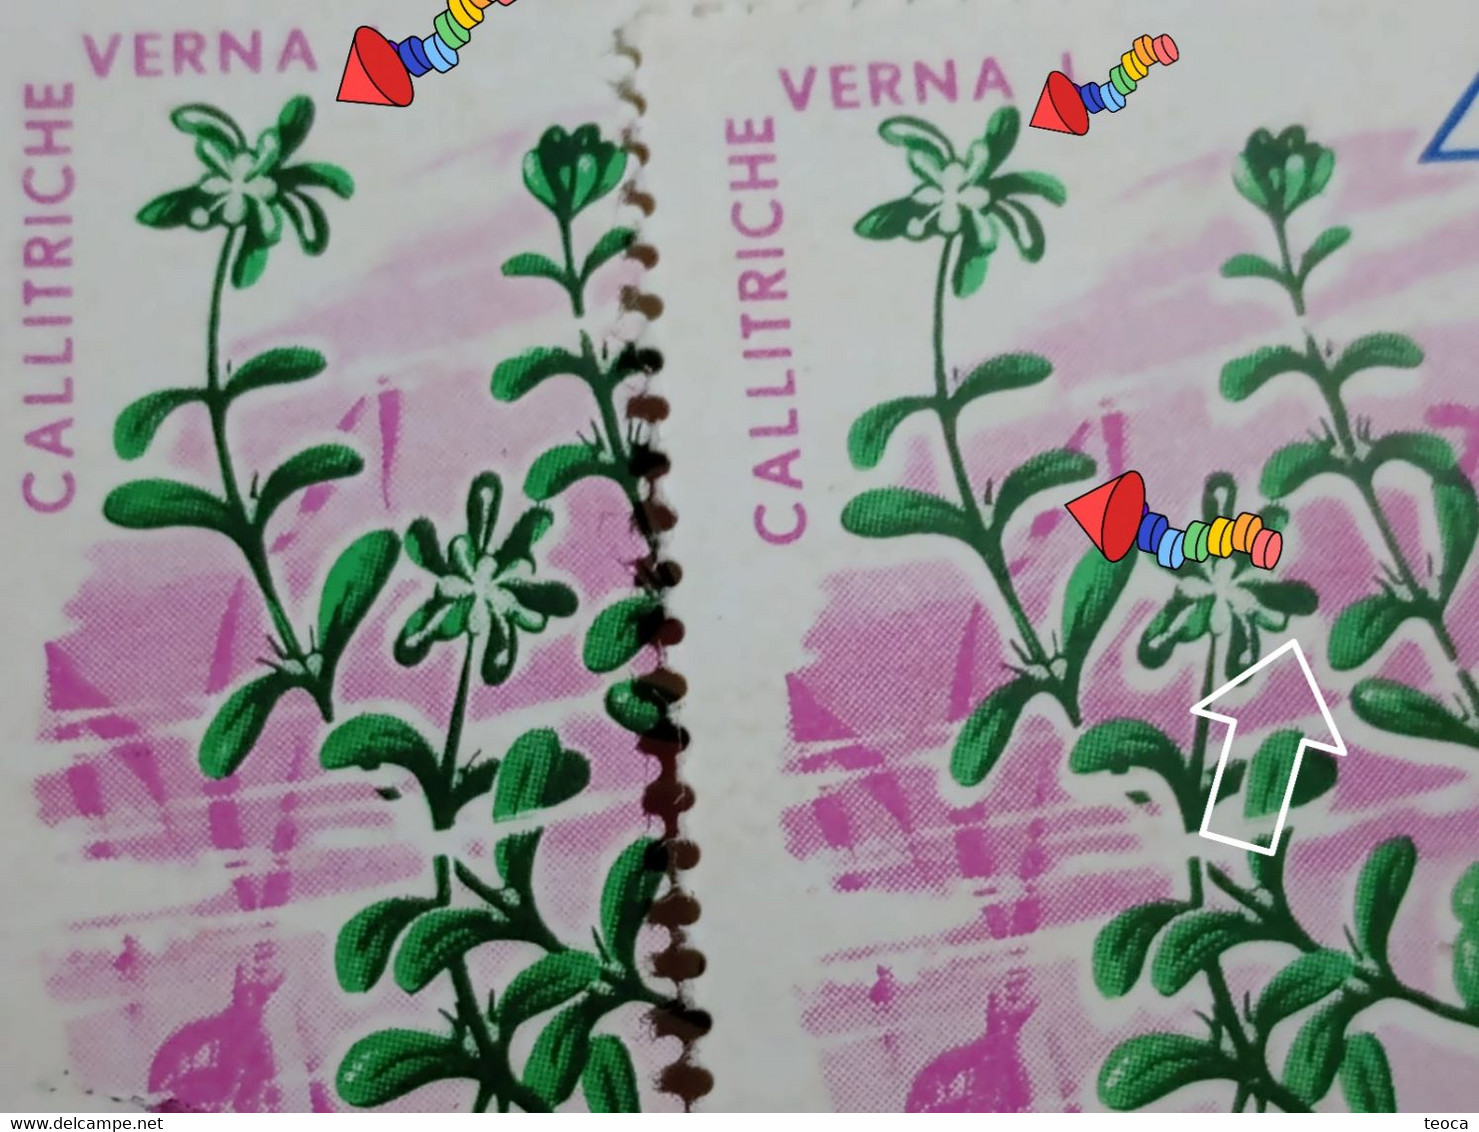 Stamps Errors Romania 1966 # Mi 2528 Printed With Misplaced Plants Flower Image Used - Abarten Und Kuriositäten